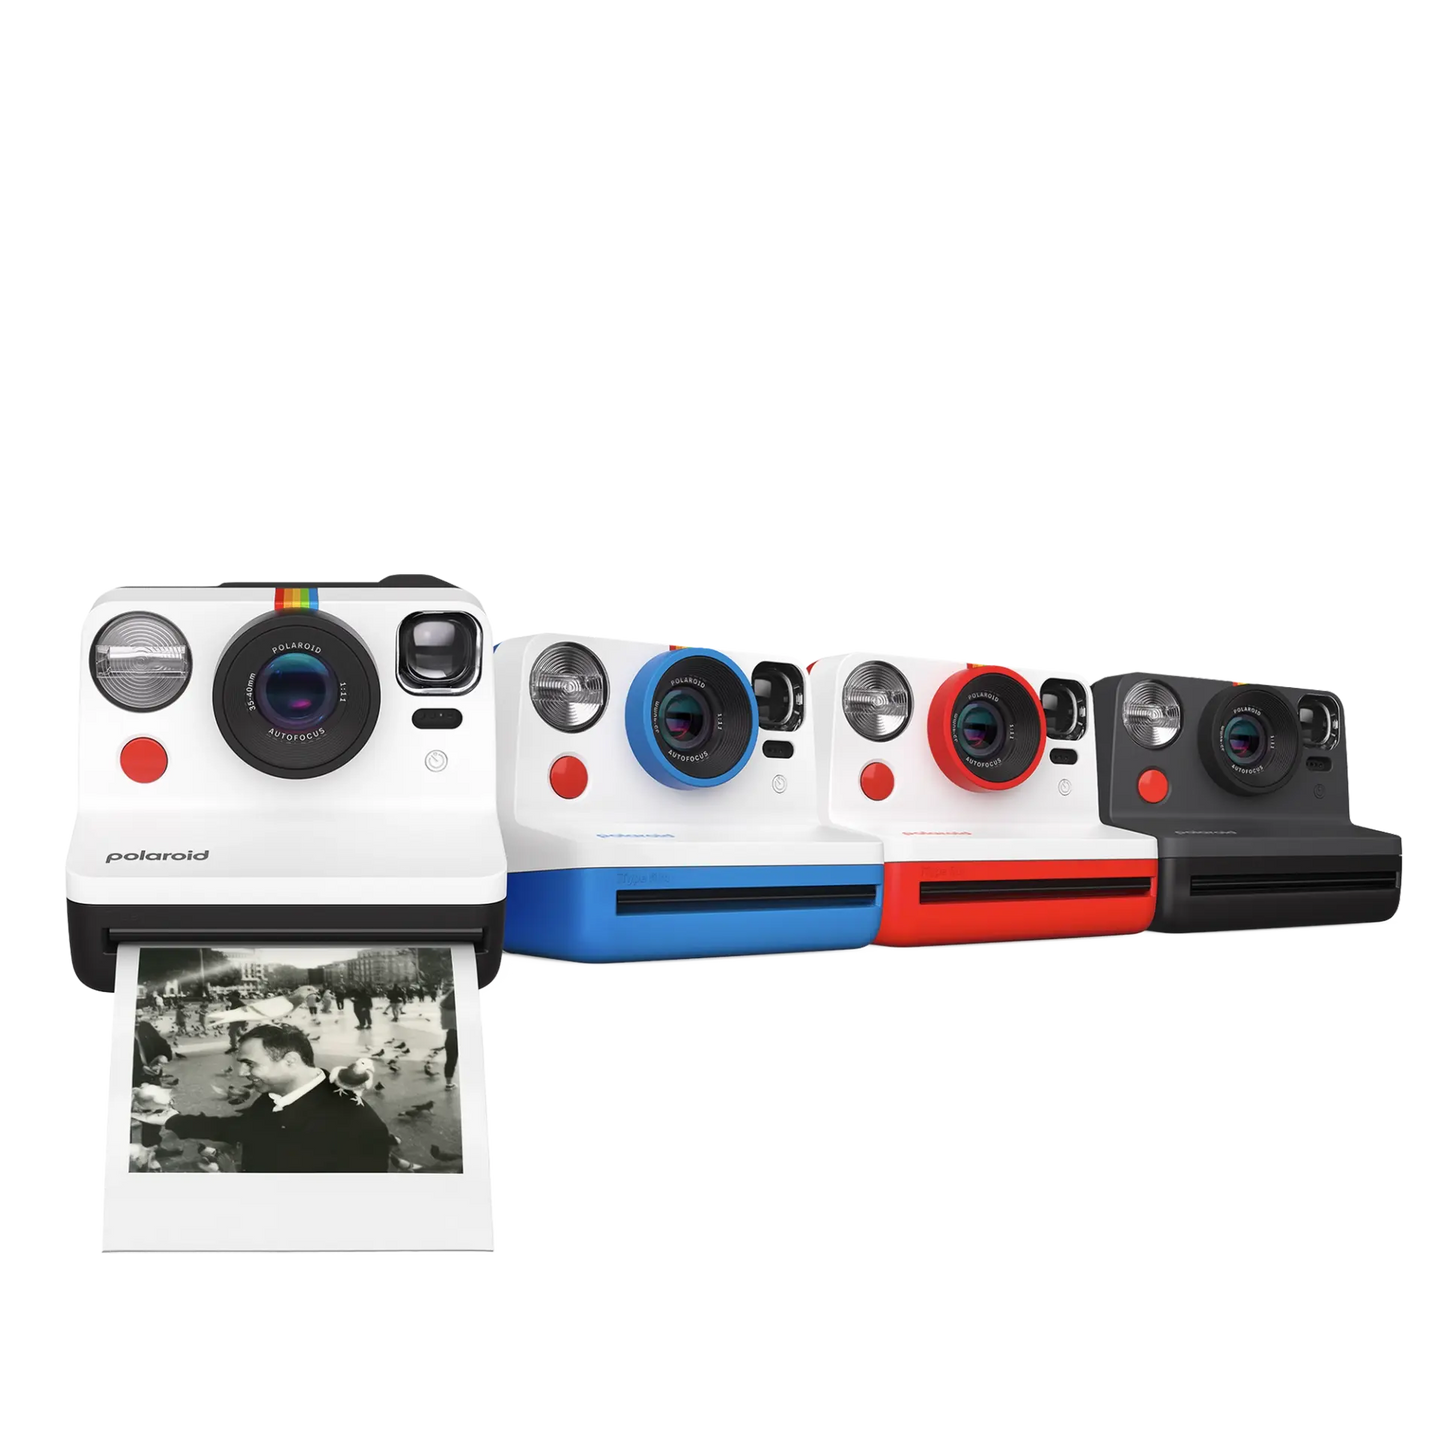 Polaroid Now Gen 2 - Rouge